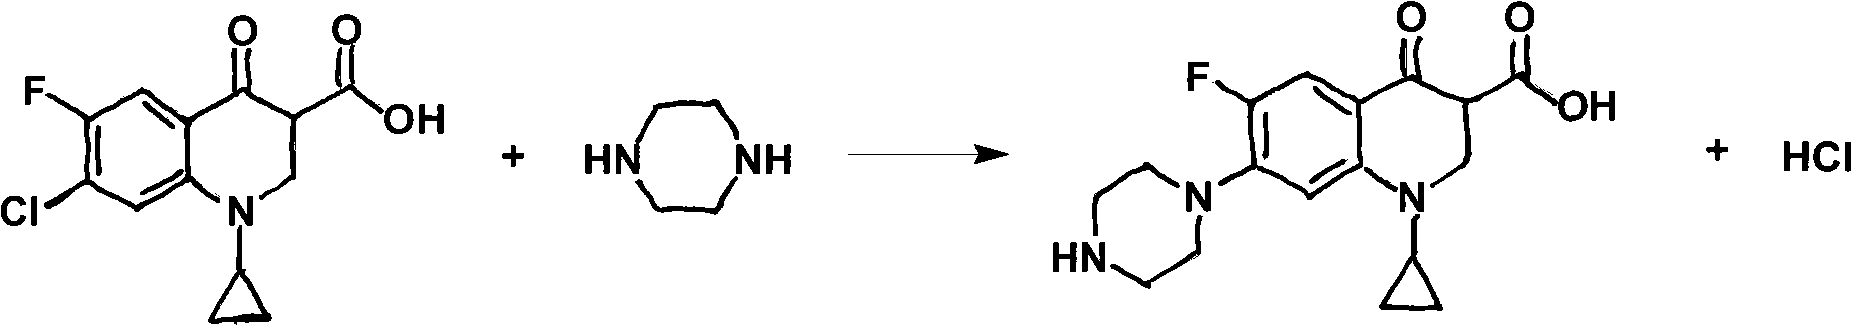 Preparation method of ciprofloxacin hydrochloride